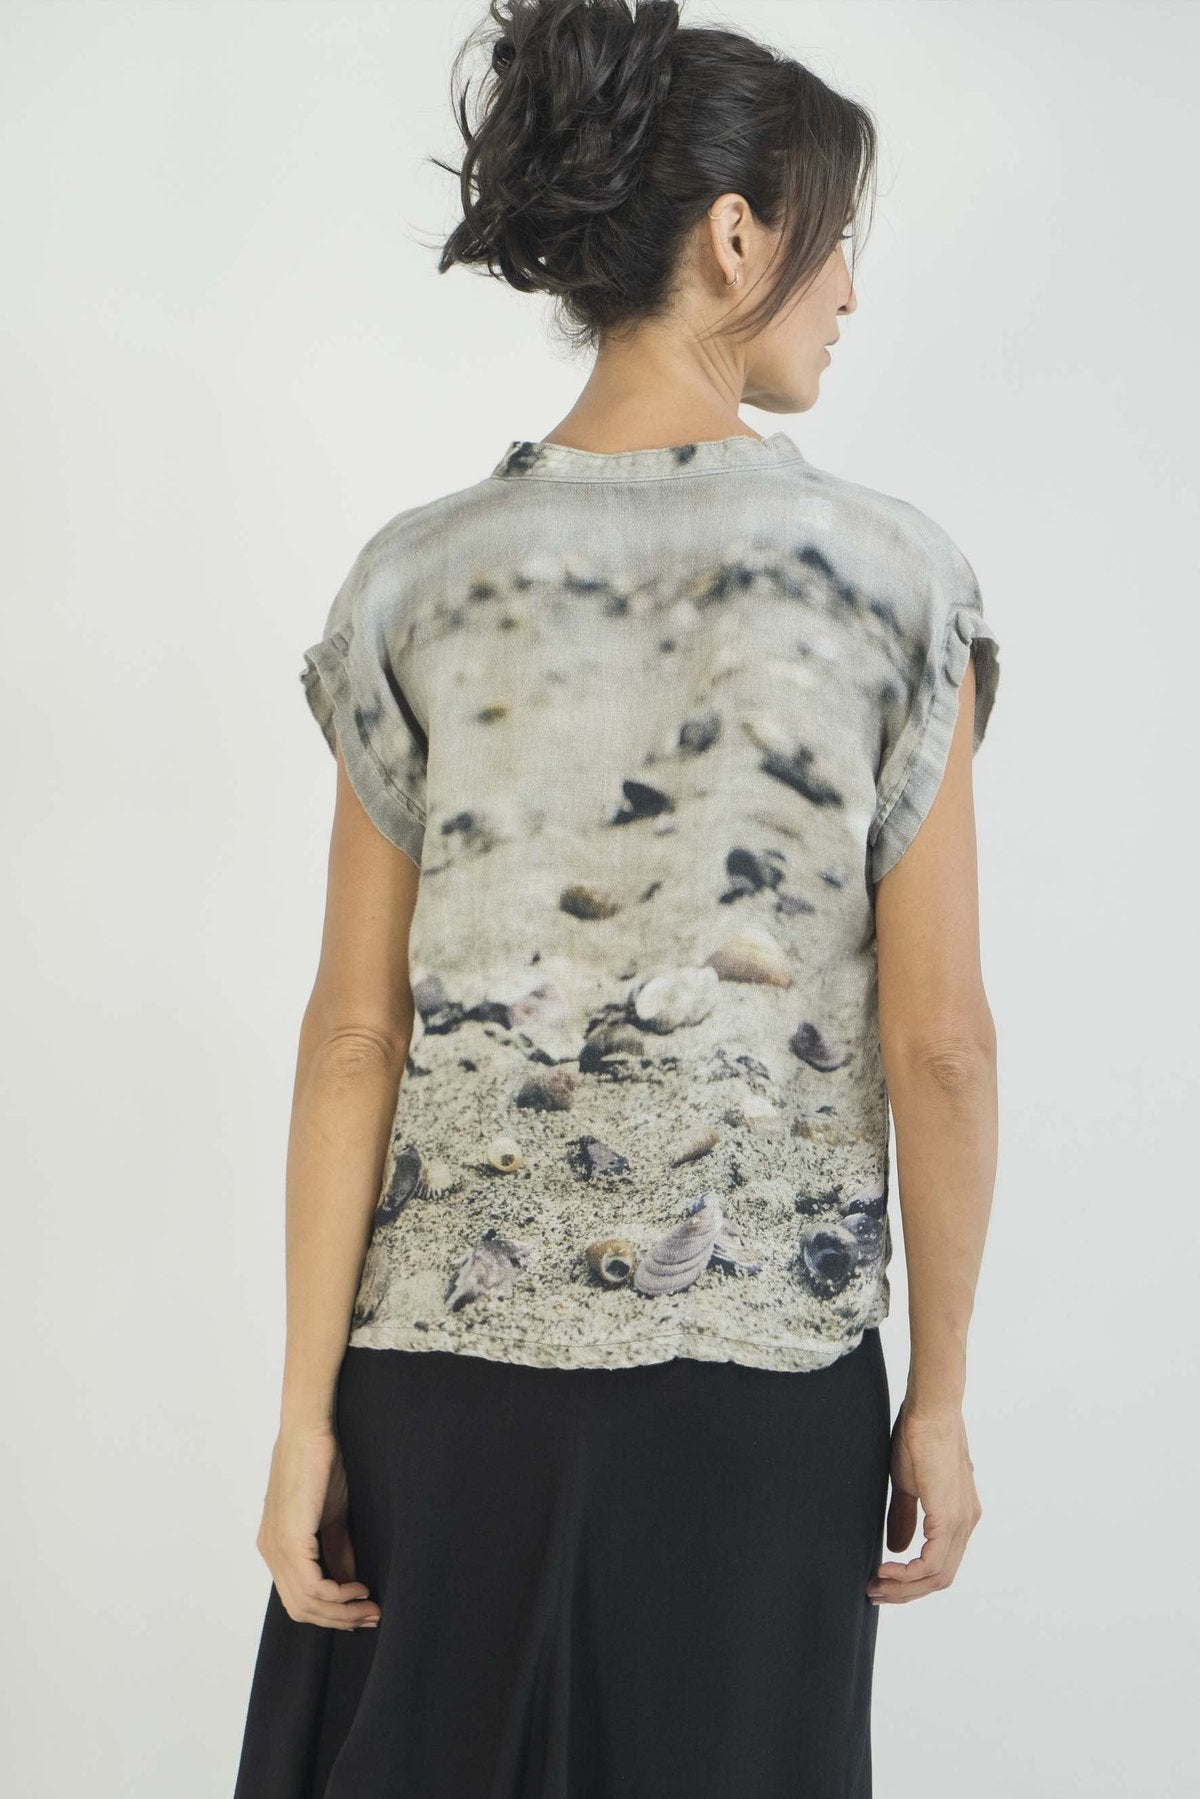 Harriet Jane Womens Hemp Clothing Shirt Blouse Australian Made Tantrika